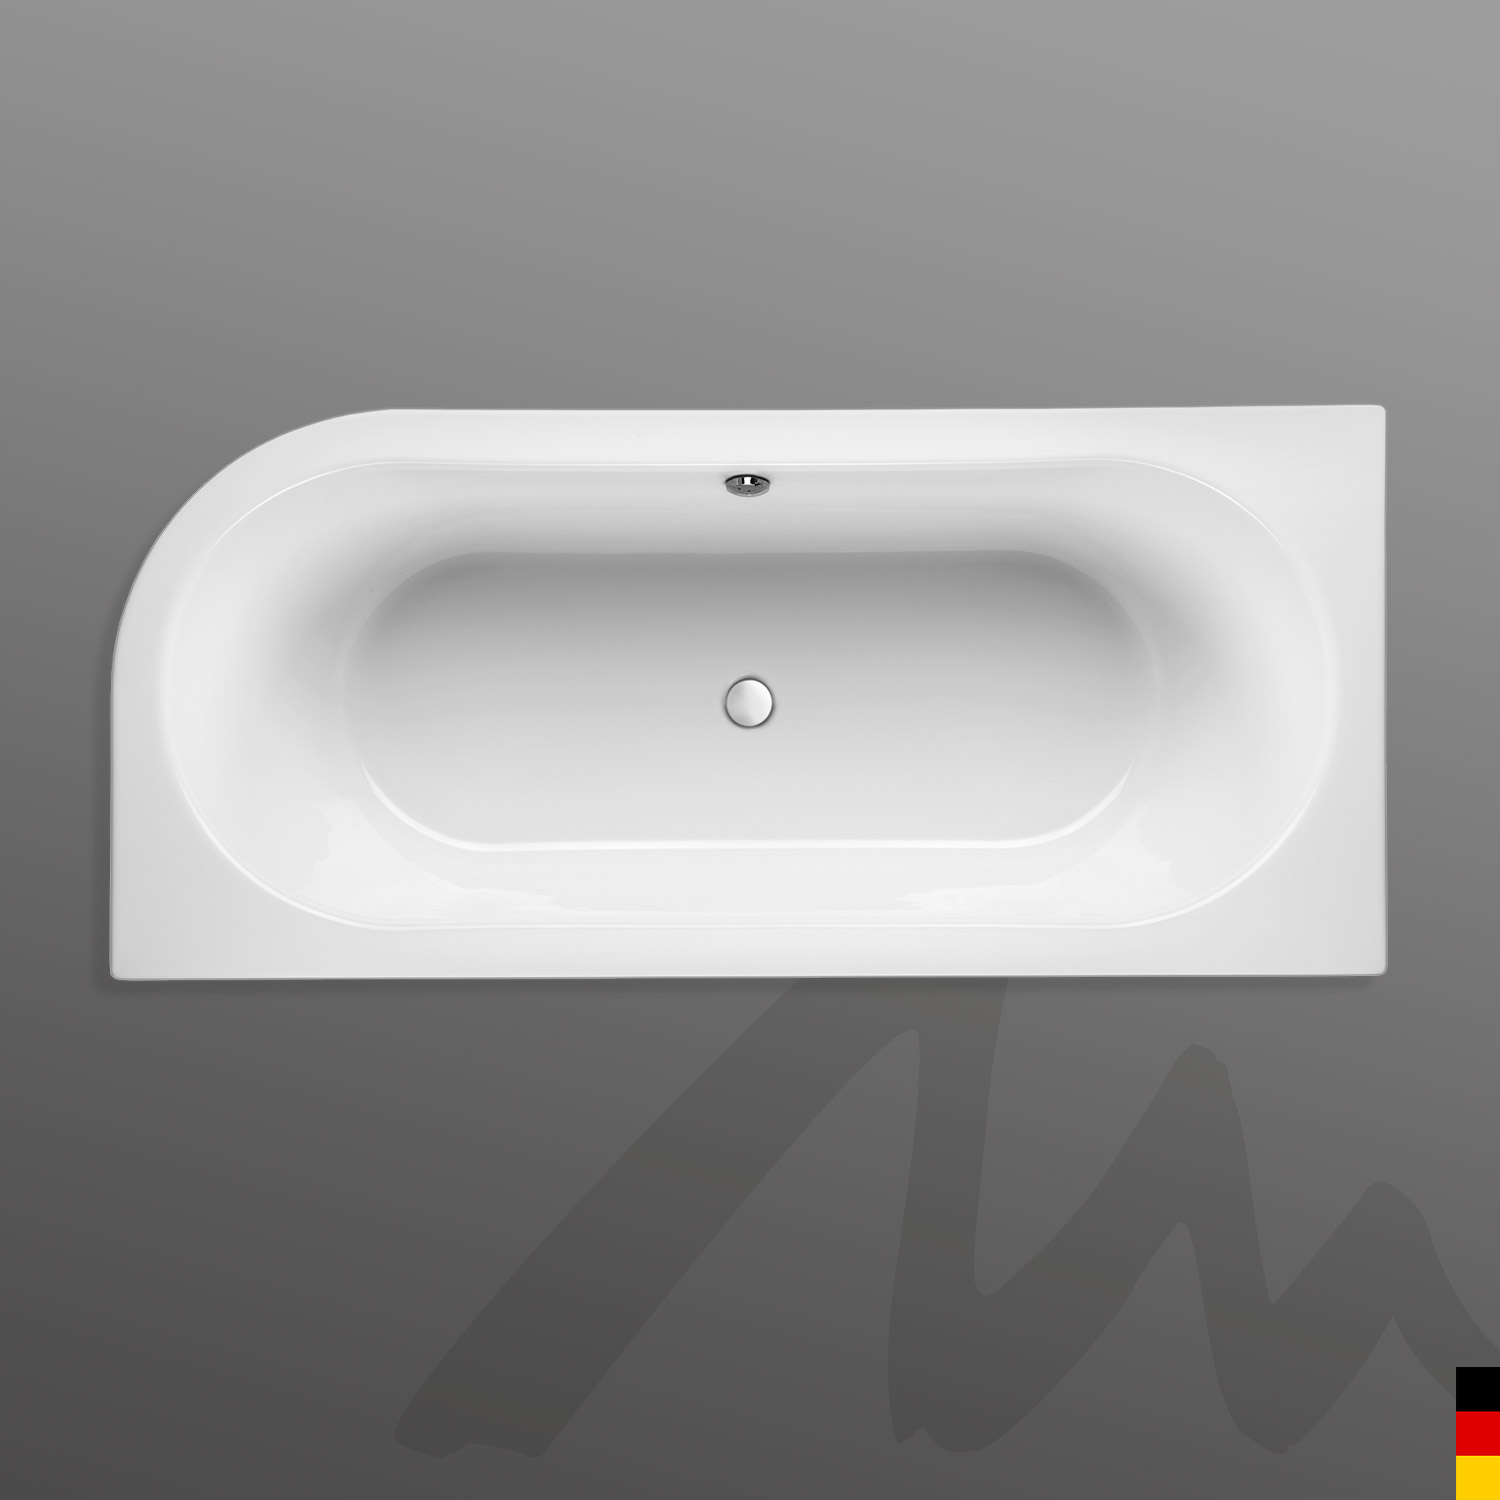 Mauersberger Badewanne Oval Primo 1 - 180/80 duo Ausführung rechts mit Acryl-Schürze/Panel  180x80x45  Farbe:weiß